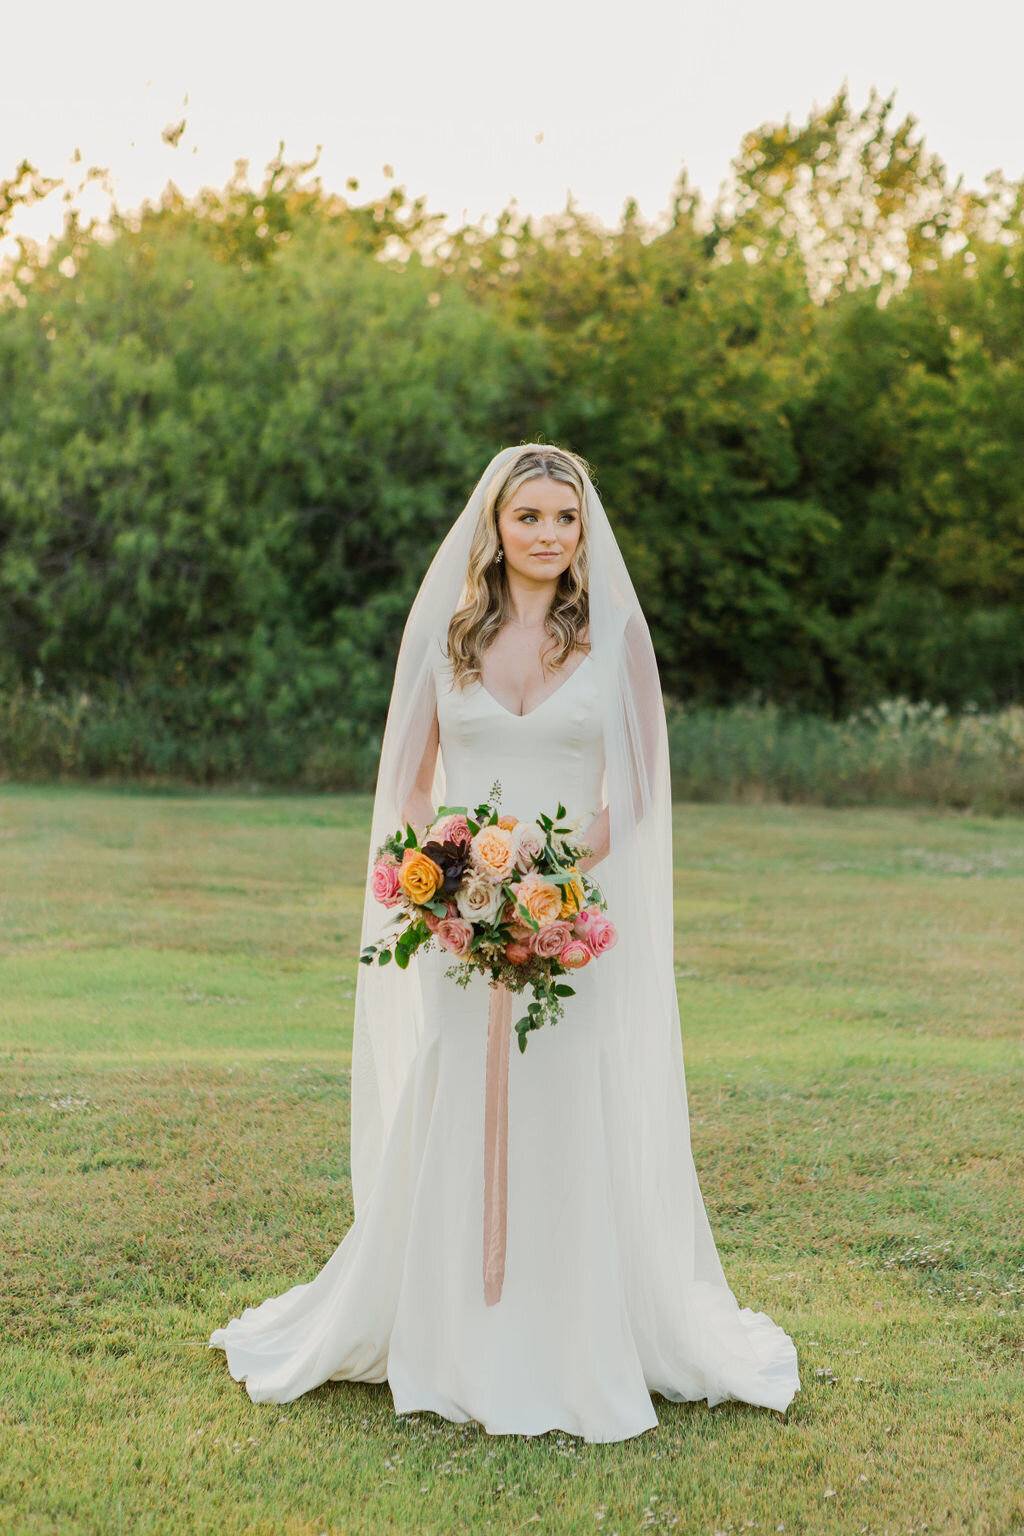 Bride with lush wedding bouquet by Vella Nest Floral Design, Dallas Fort Worth Wedding Florist